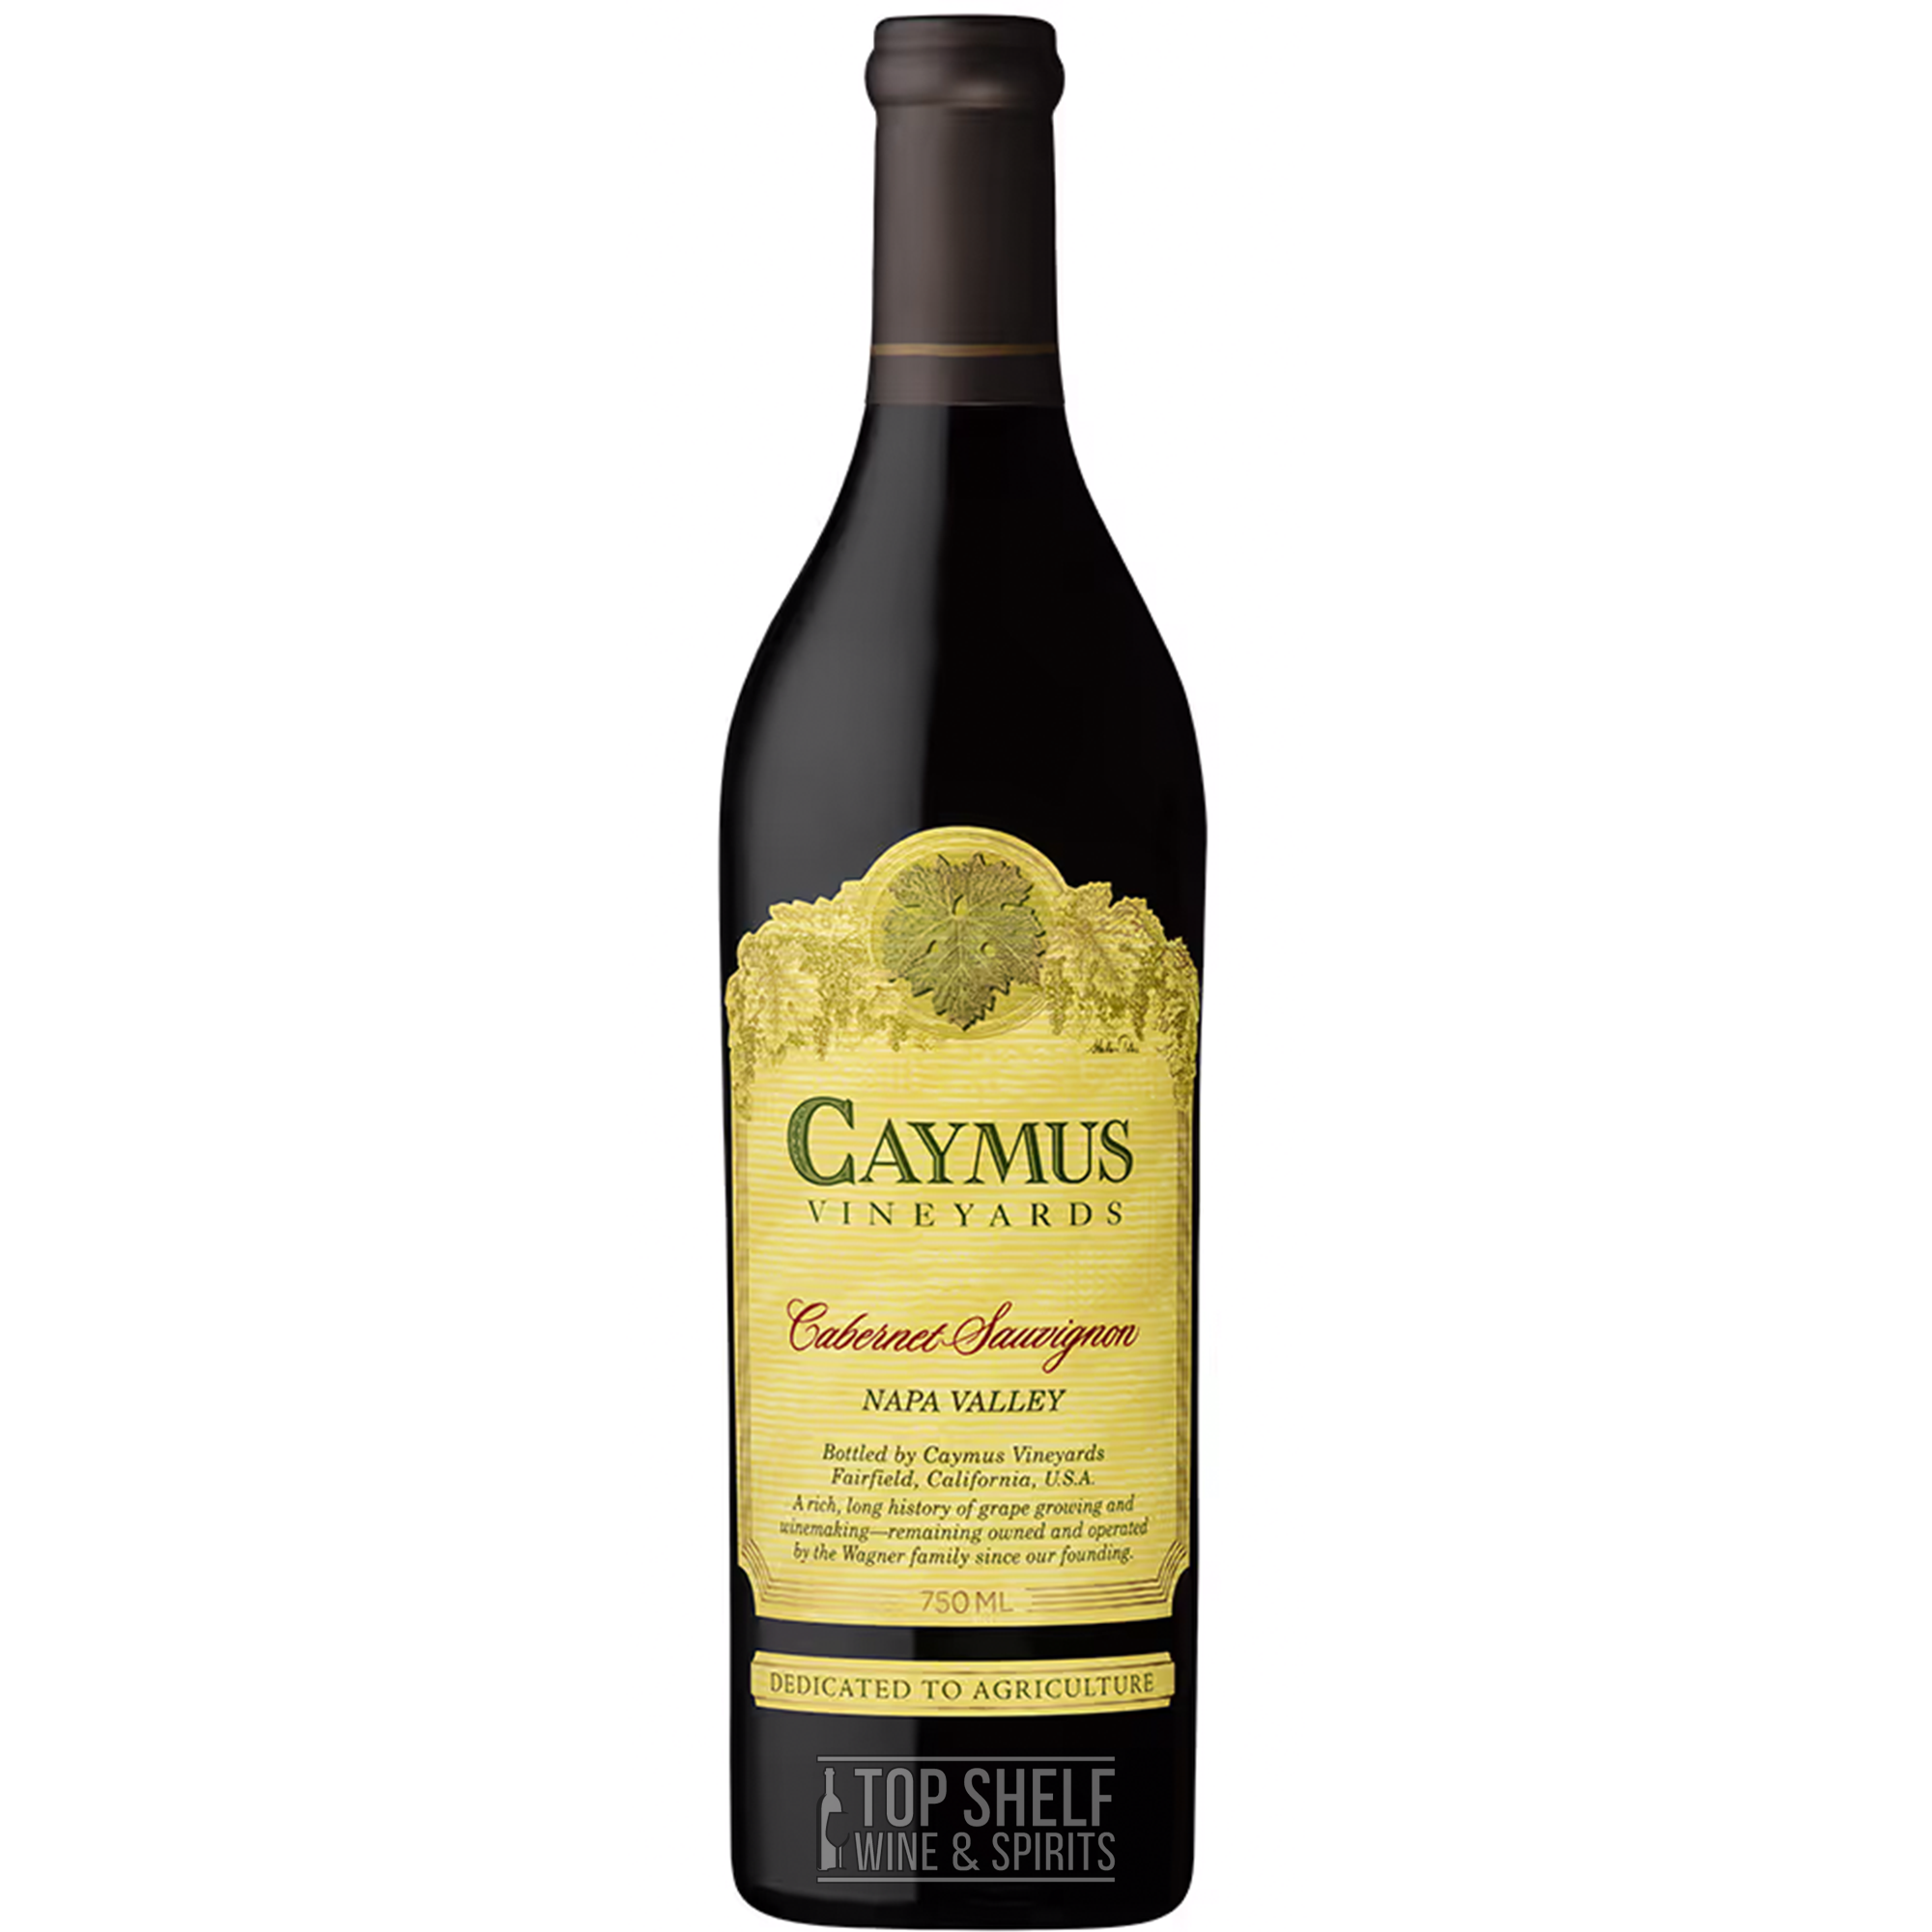 Caymus Vineyards Napa Valley Cabernet Sauvignon 2020